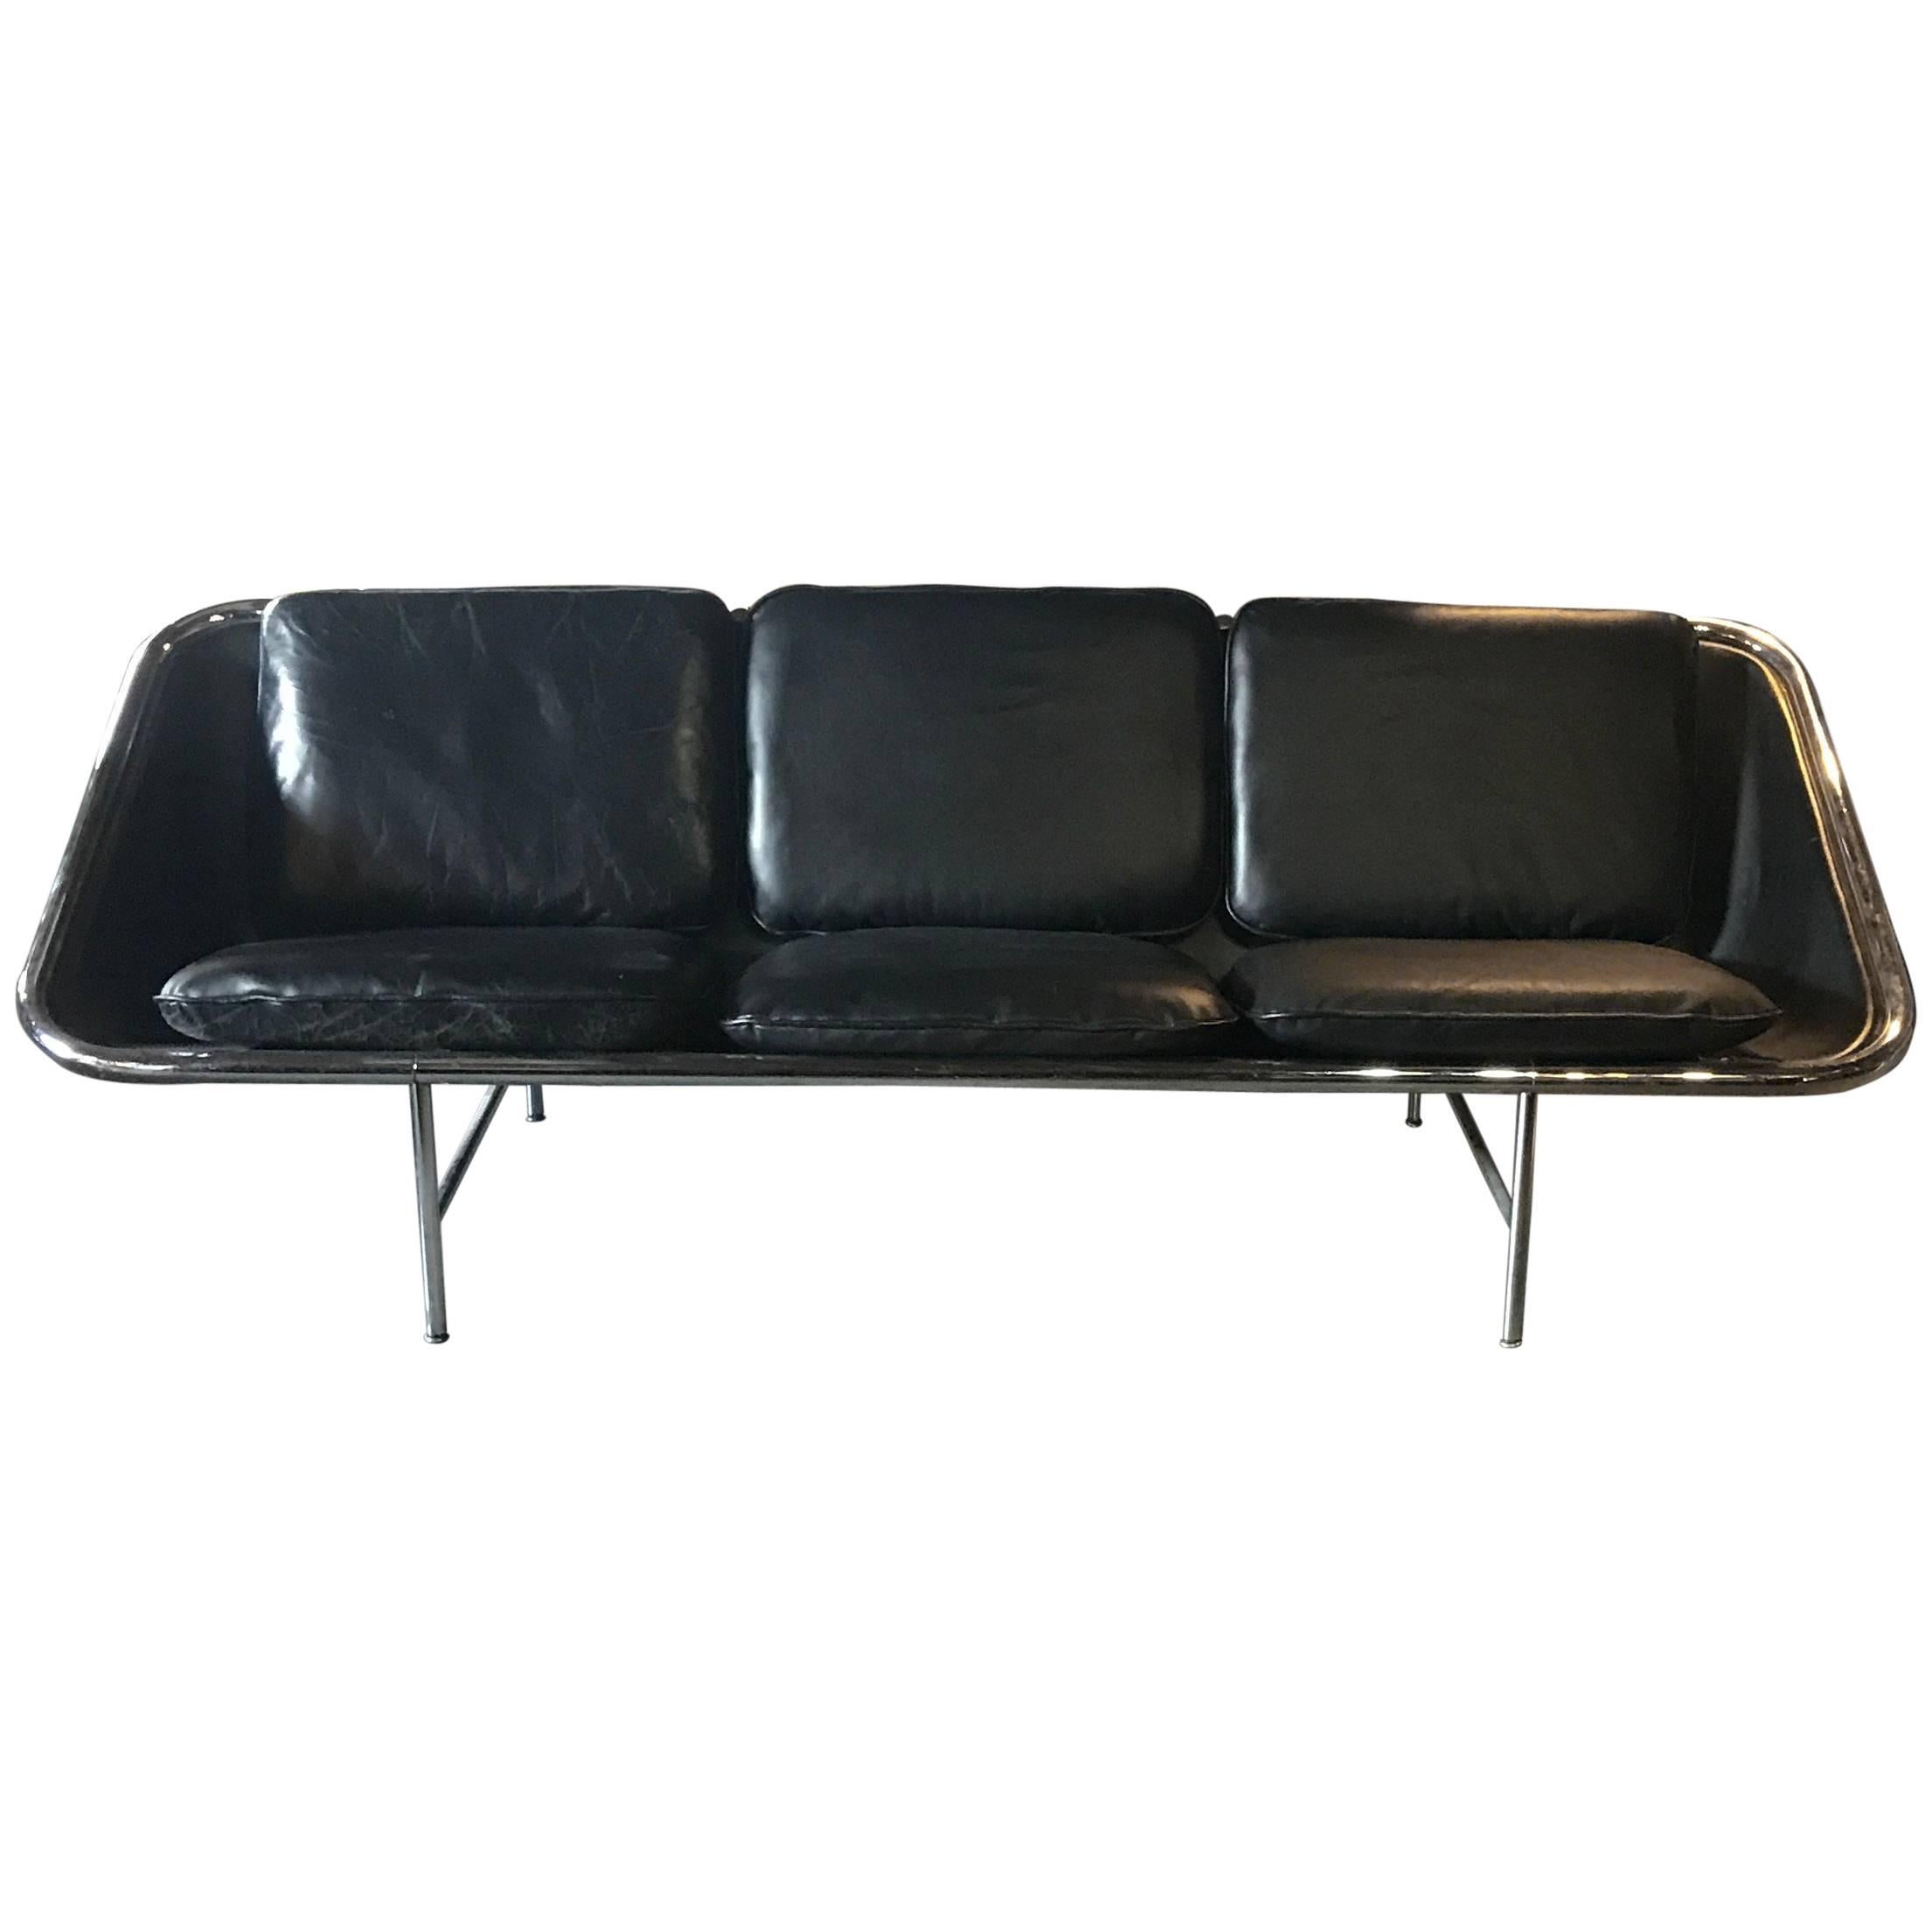 George Nelson "Sling" Sofa Black Leather for Herman Miller